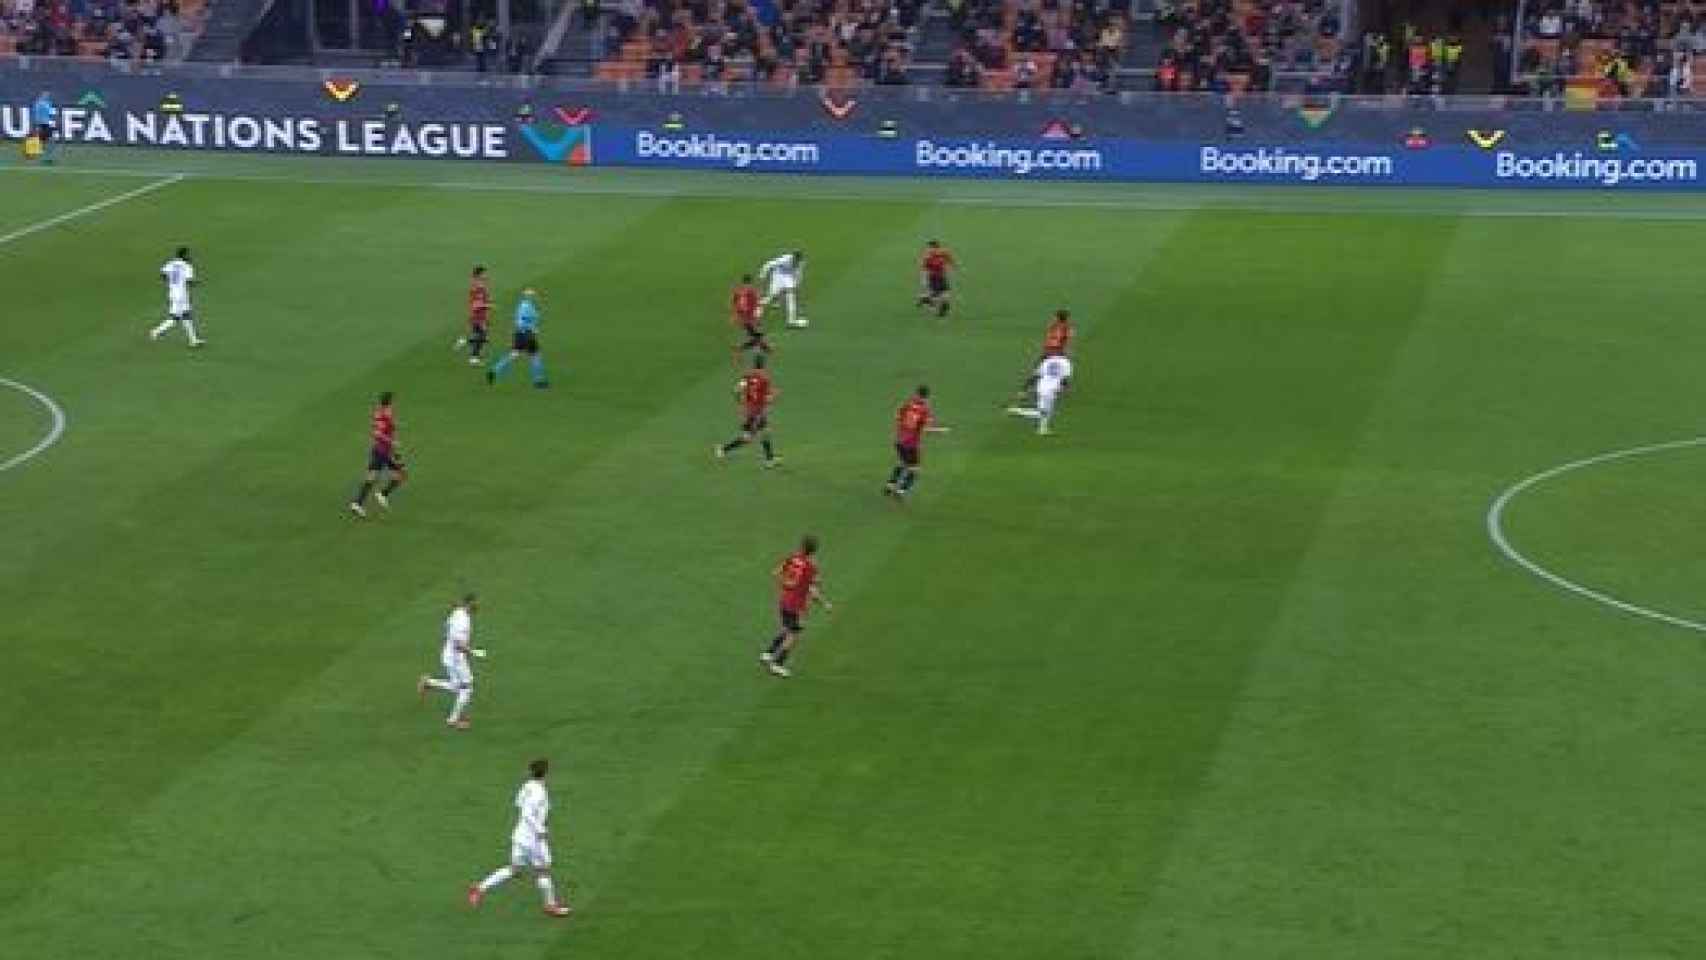 Polémica en el España - Francia: el gol de Mbappé en fuera de juego que subió al marcador